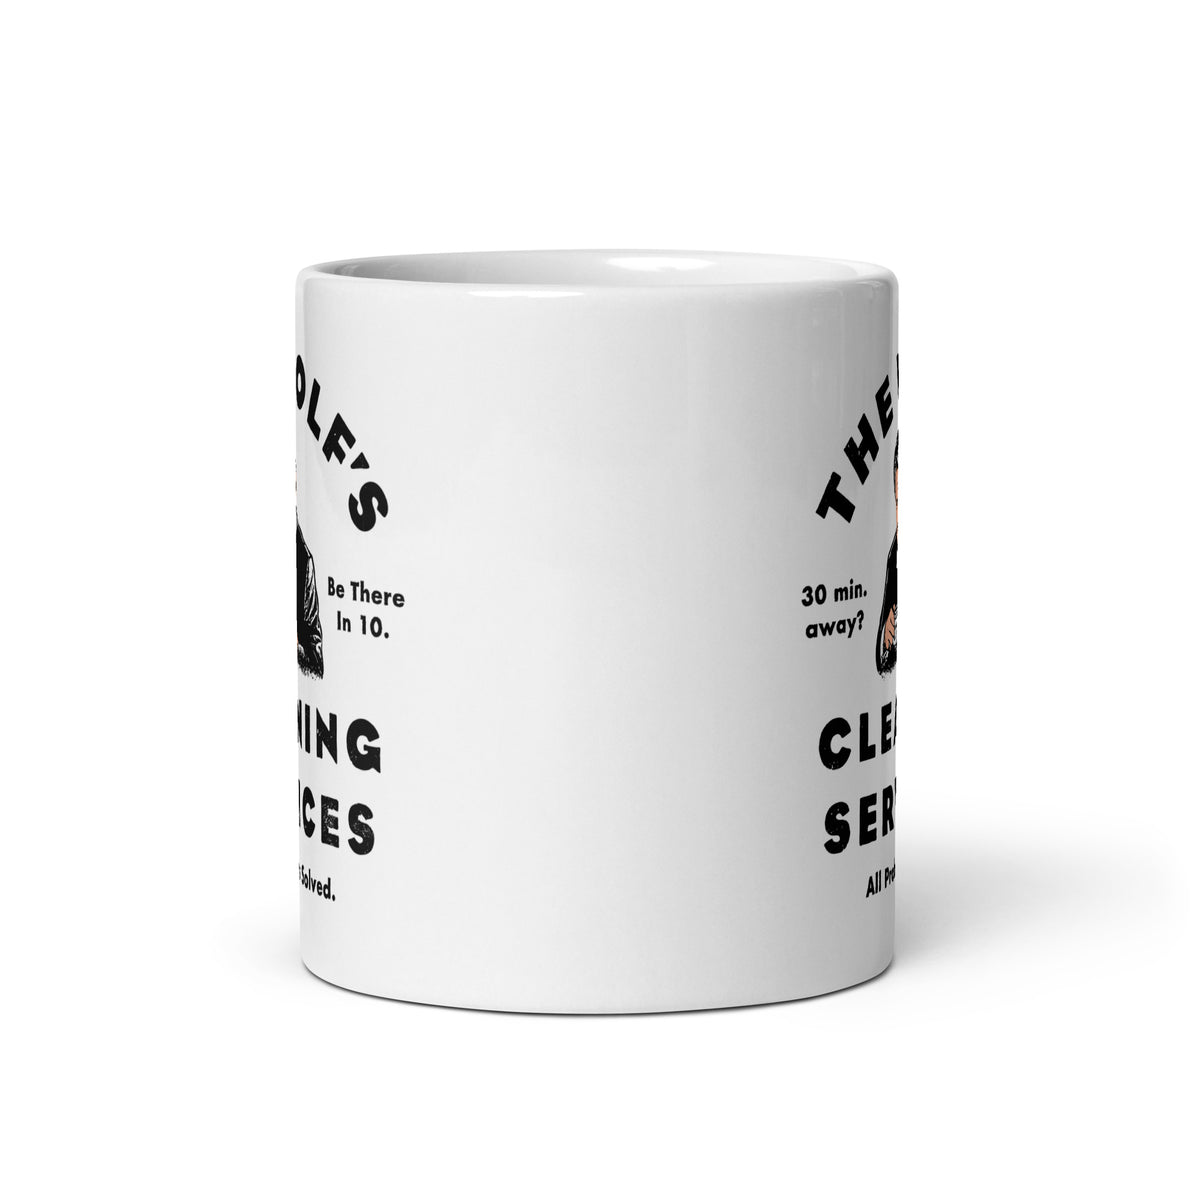 The Office Vance Refrigeration White Mug – NBC Store